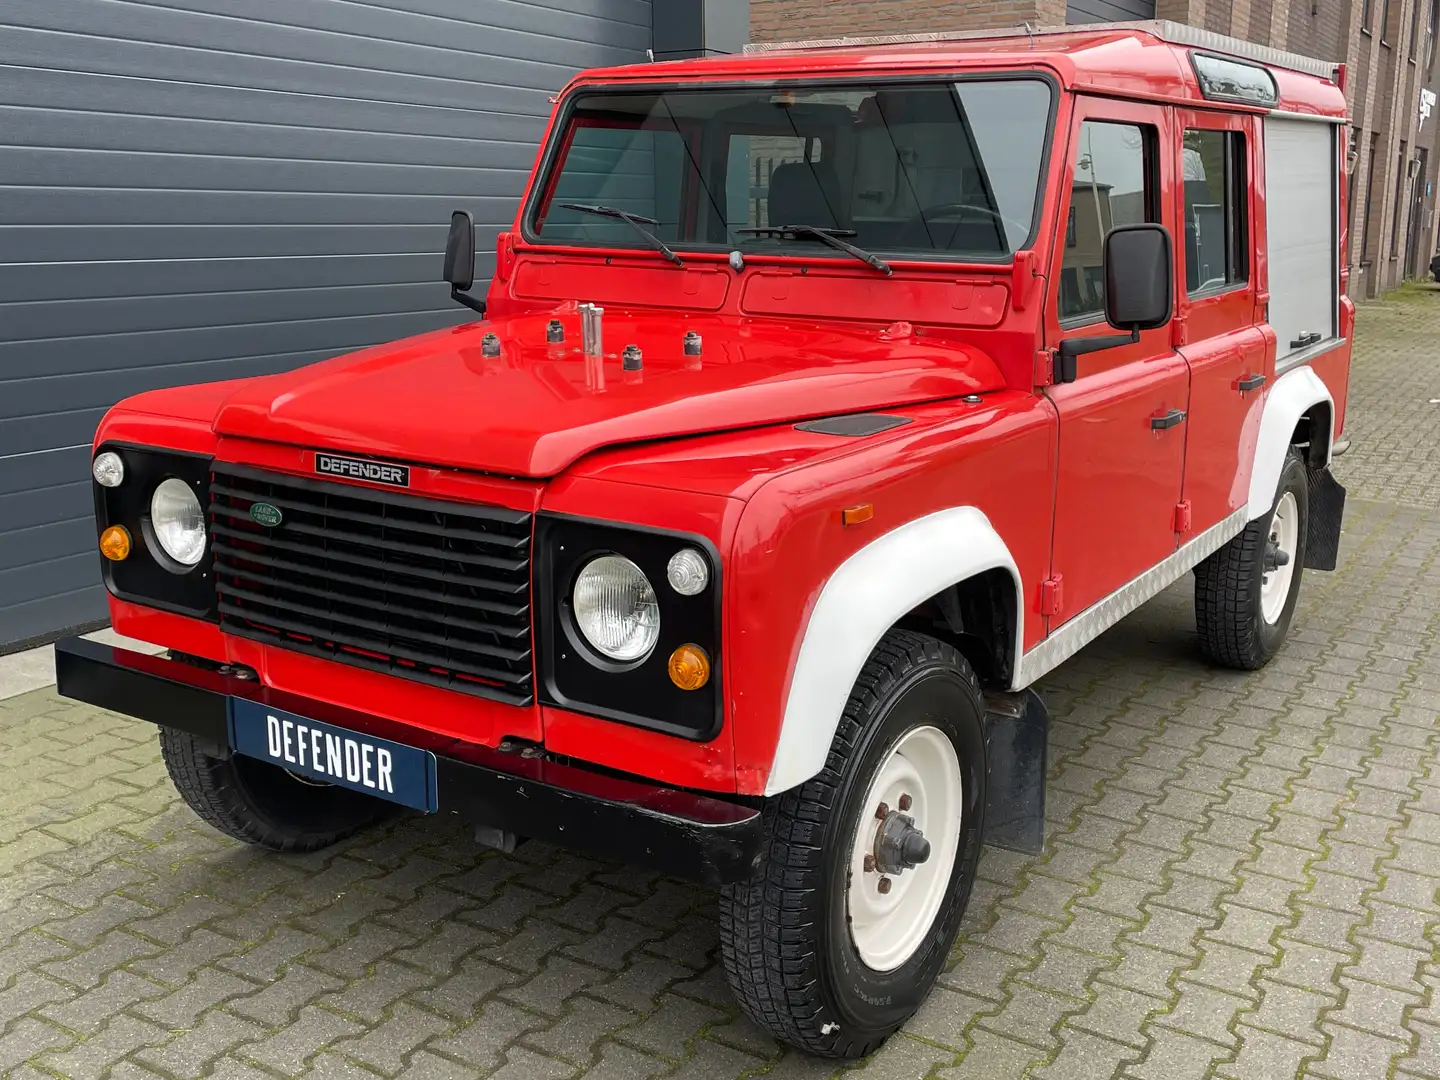 Land Rover Defender SUV/Off-Road/Pick-Up in Rood oldtimer in Eindhoven voor  € 69.450,-